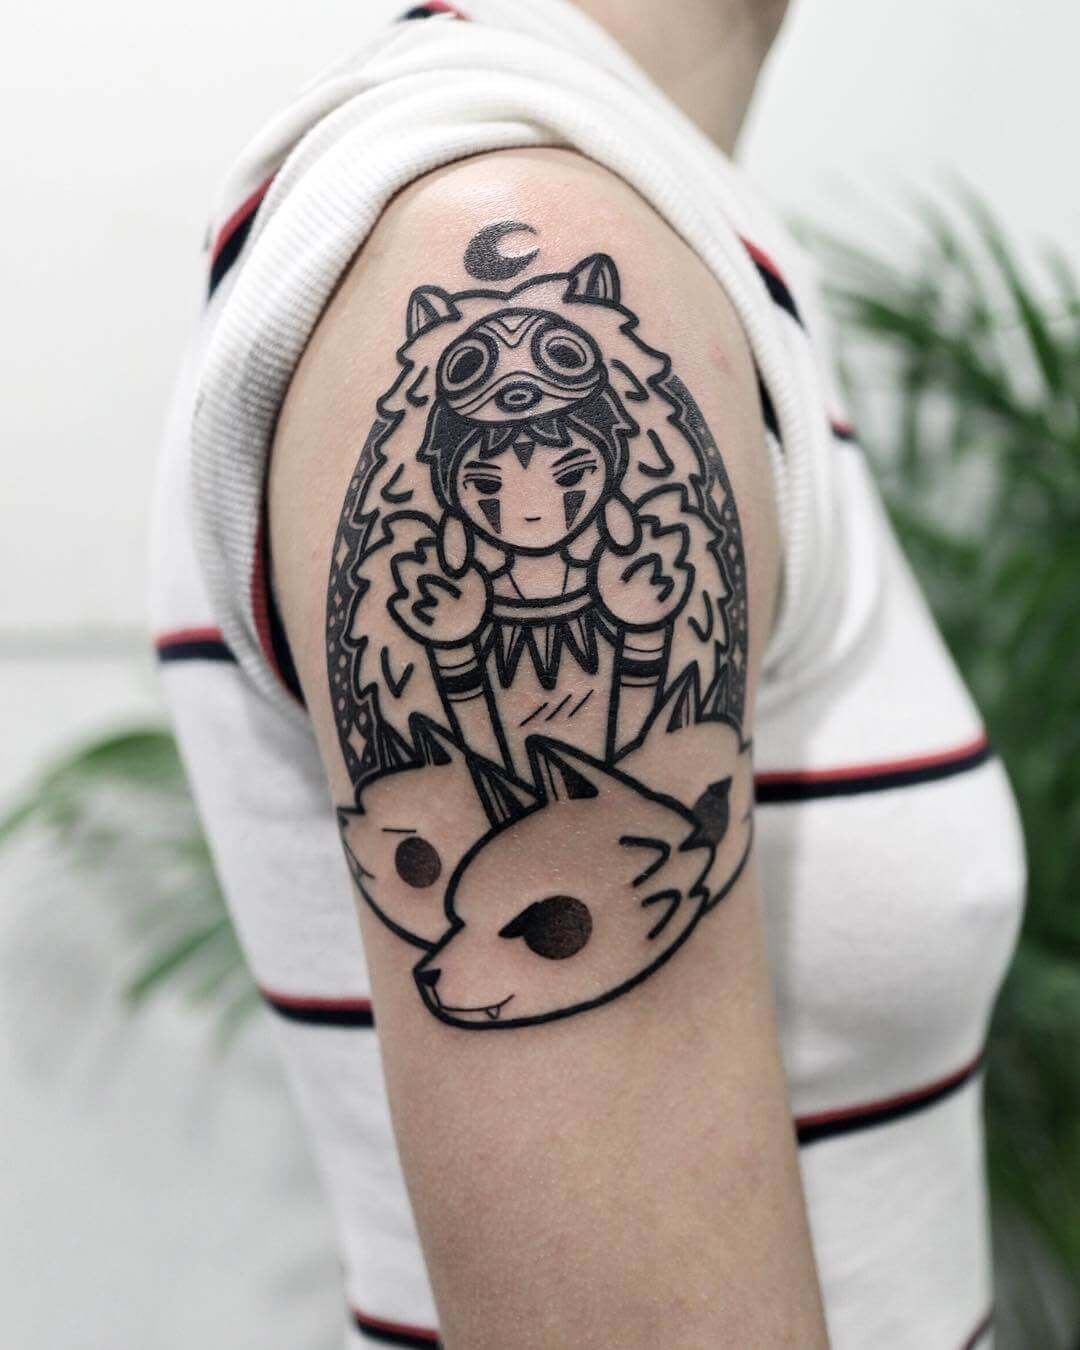 Princess Mononoke with wolves tattoo